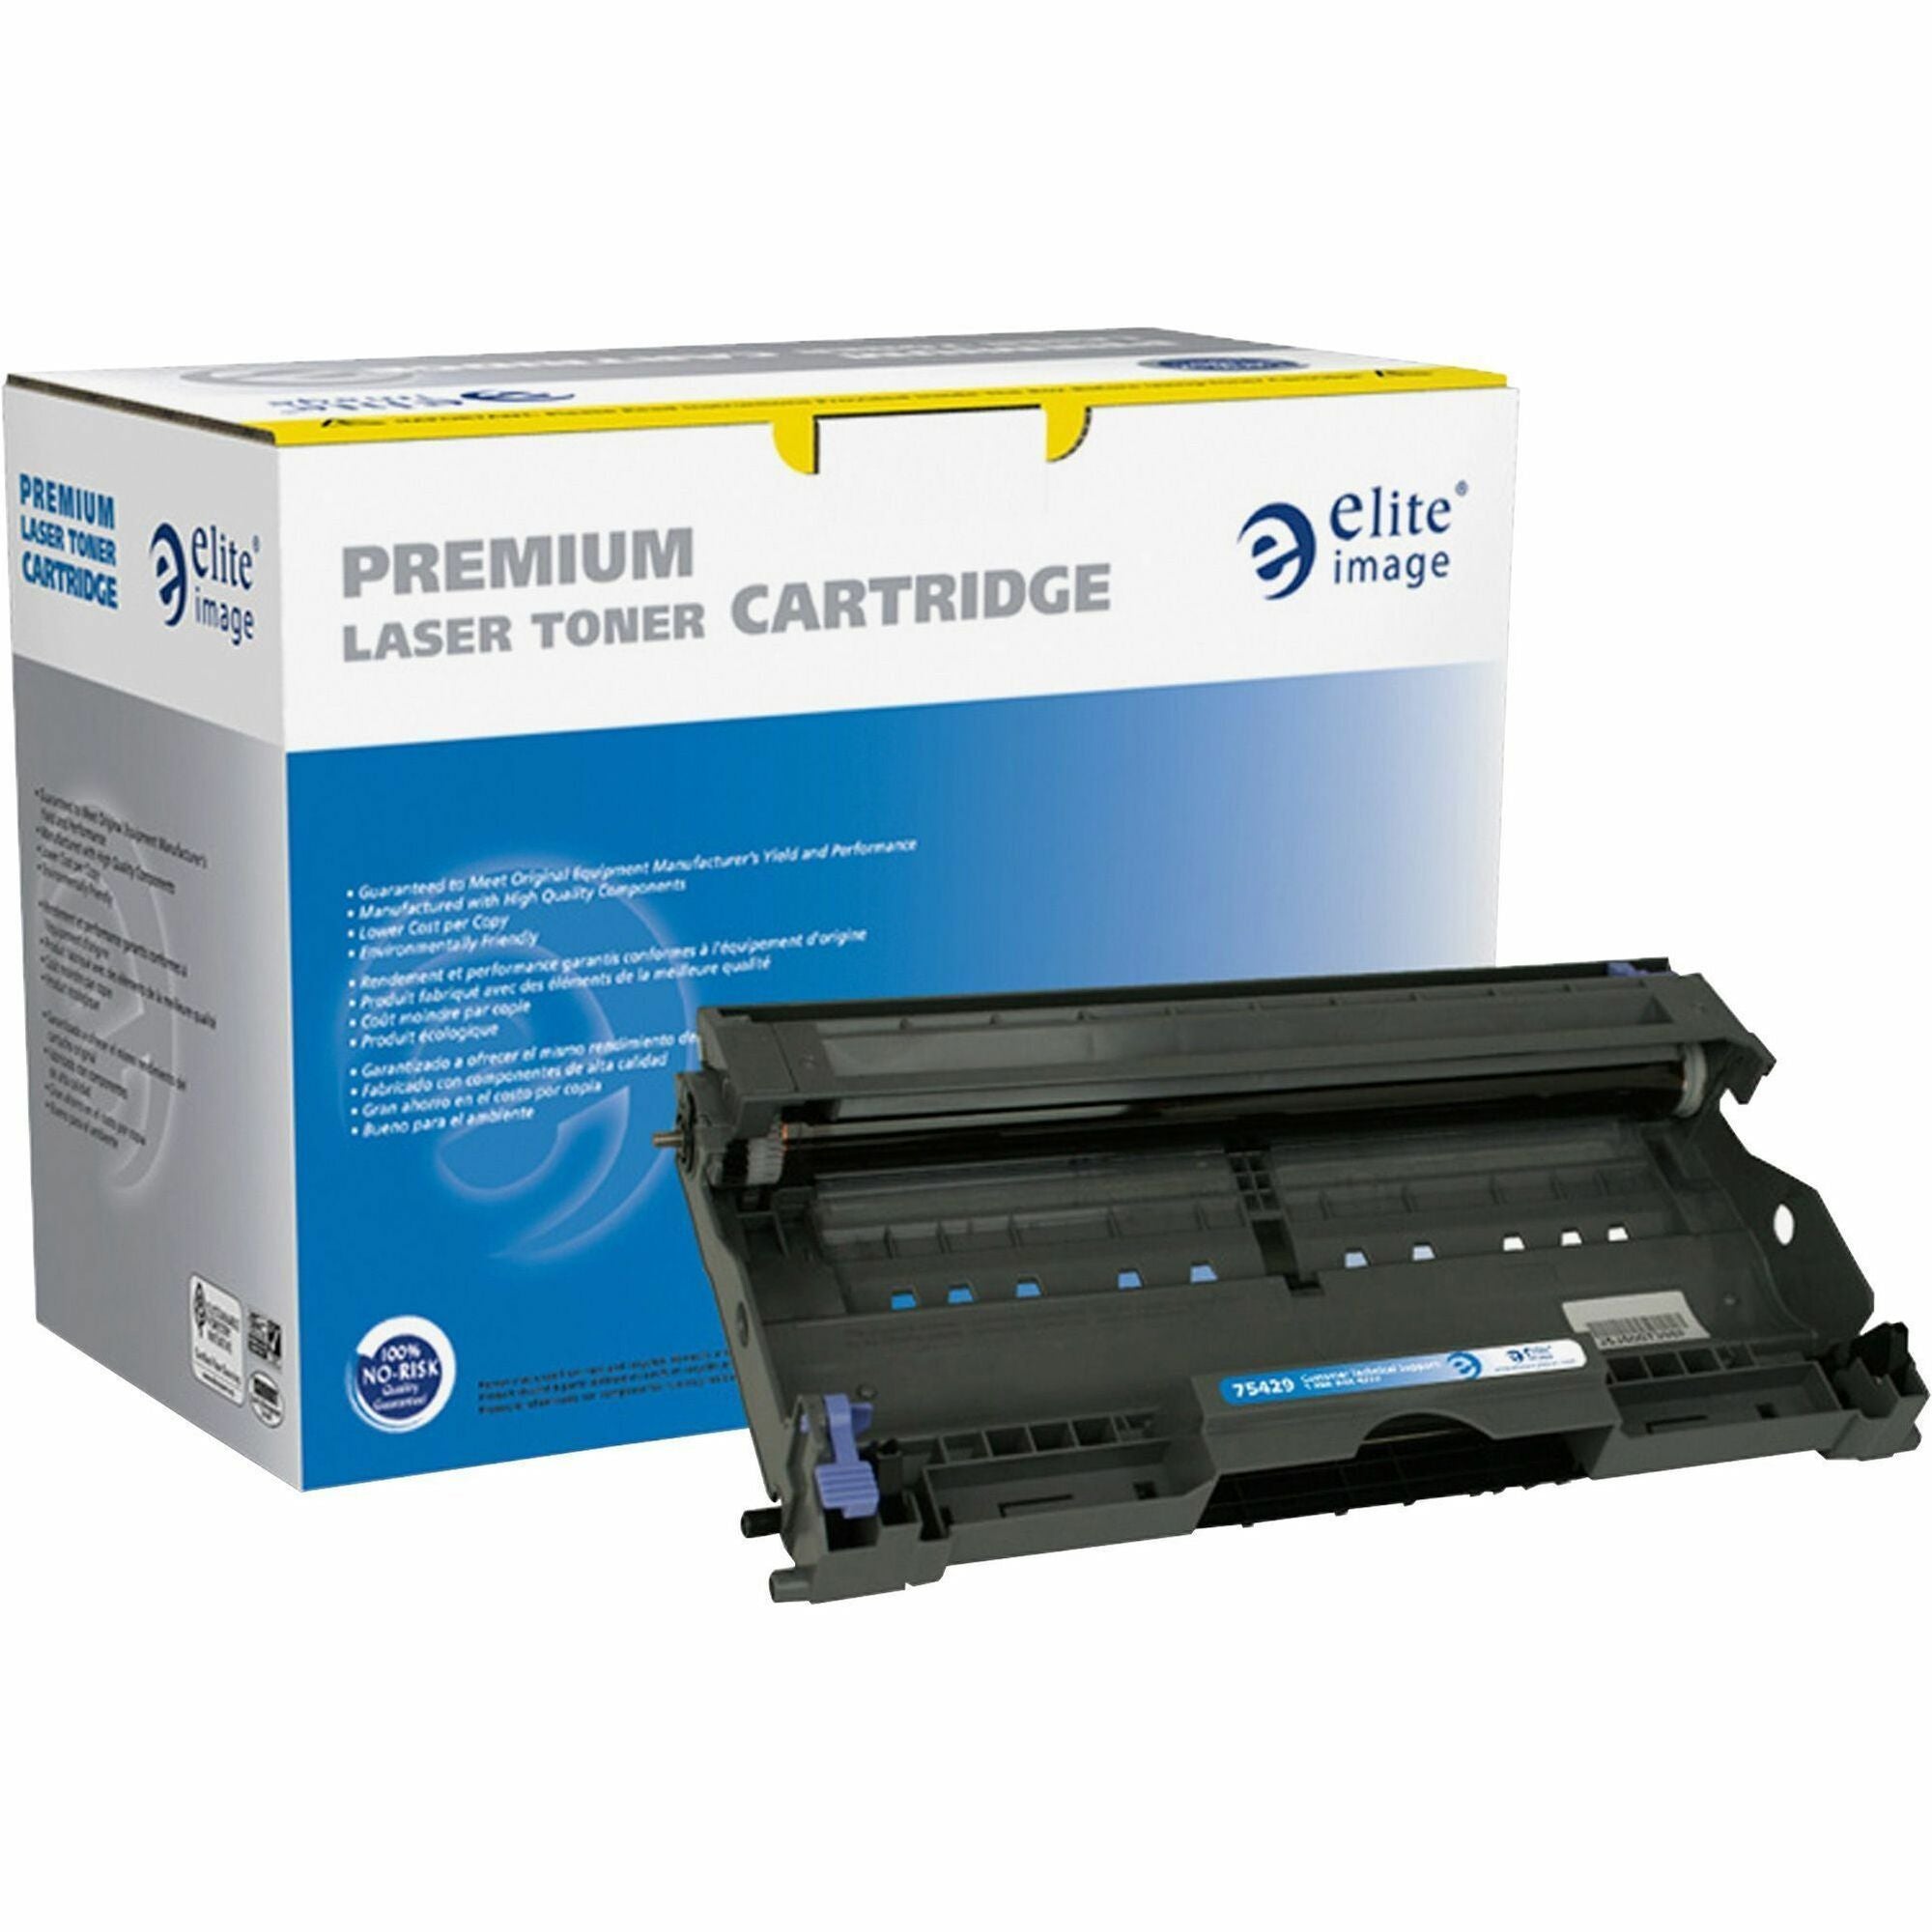 Elite Image Remanufactured Drum Cartridge Alternative For Brother DR520 - Laser Print Technology - 25000 - 1 Each - 